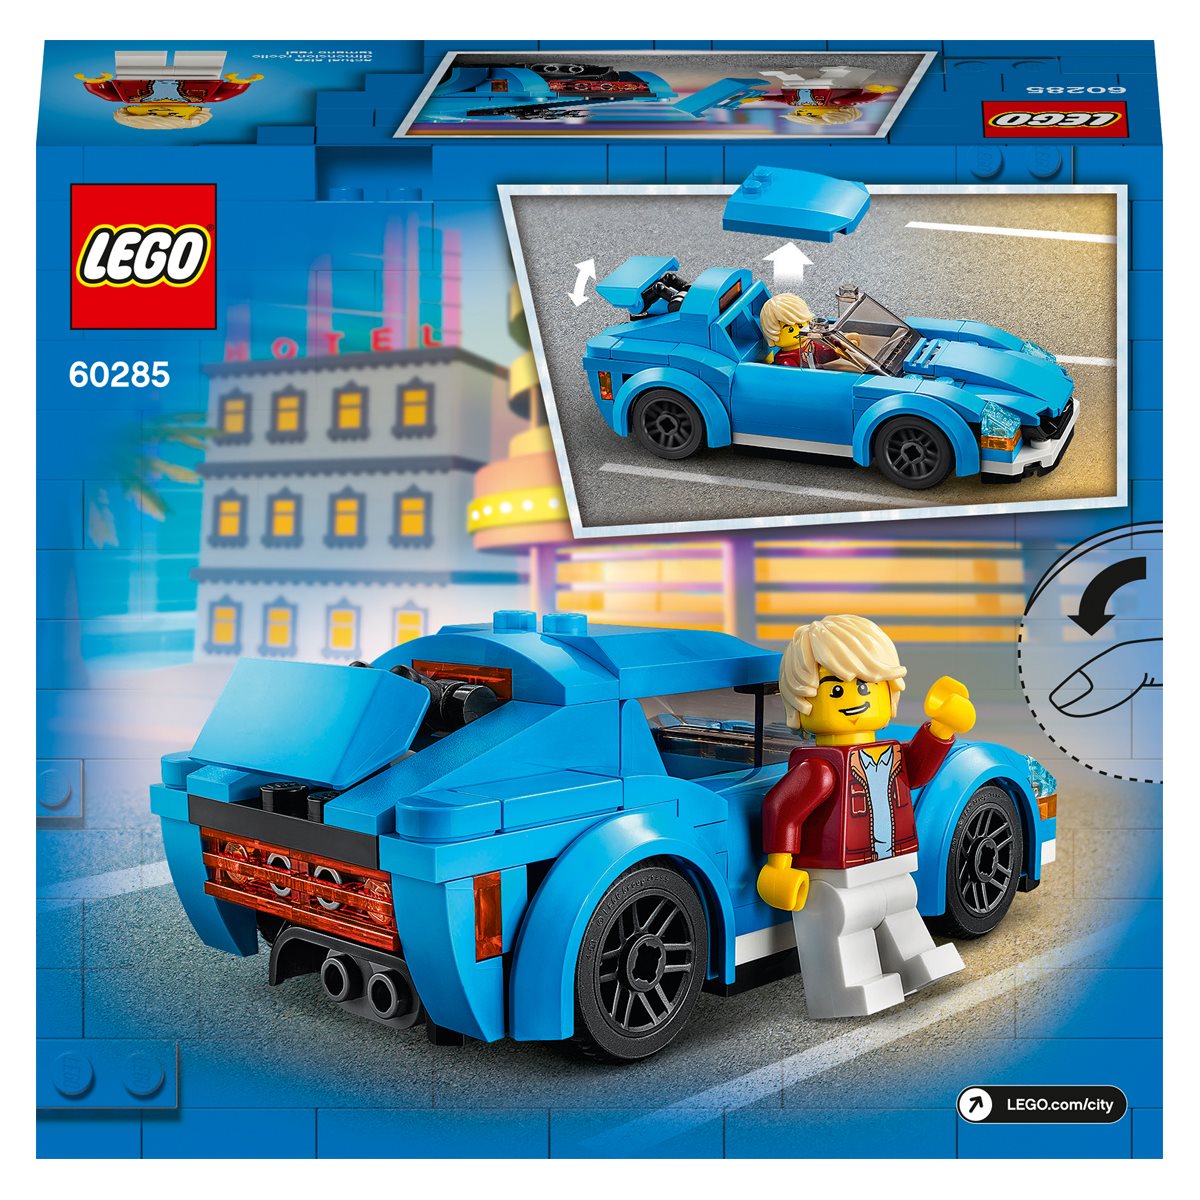 LEGO 60285 City Sports Car - Entertainment Earth